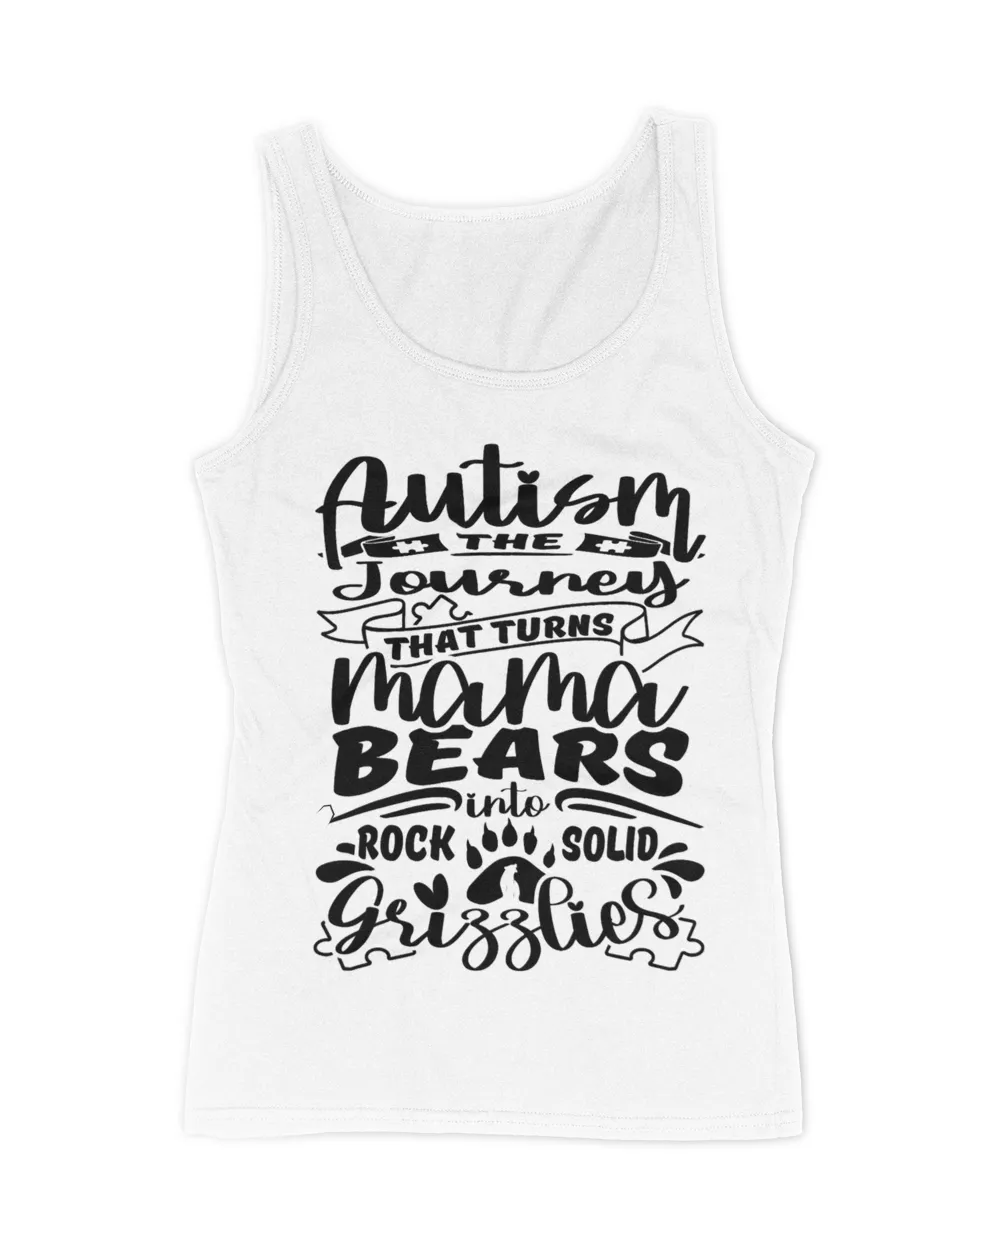 Autism turns Mama Bear into Grizzlies 2Autism Mom Awareness